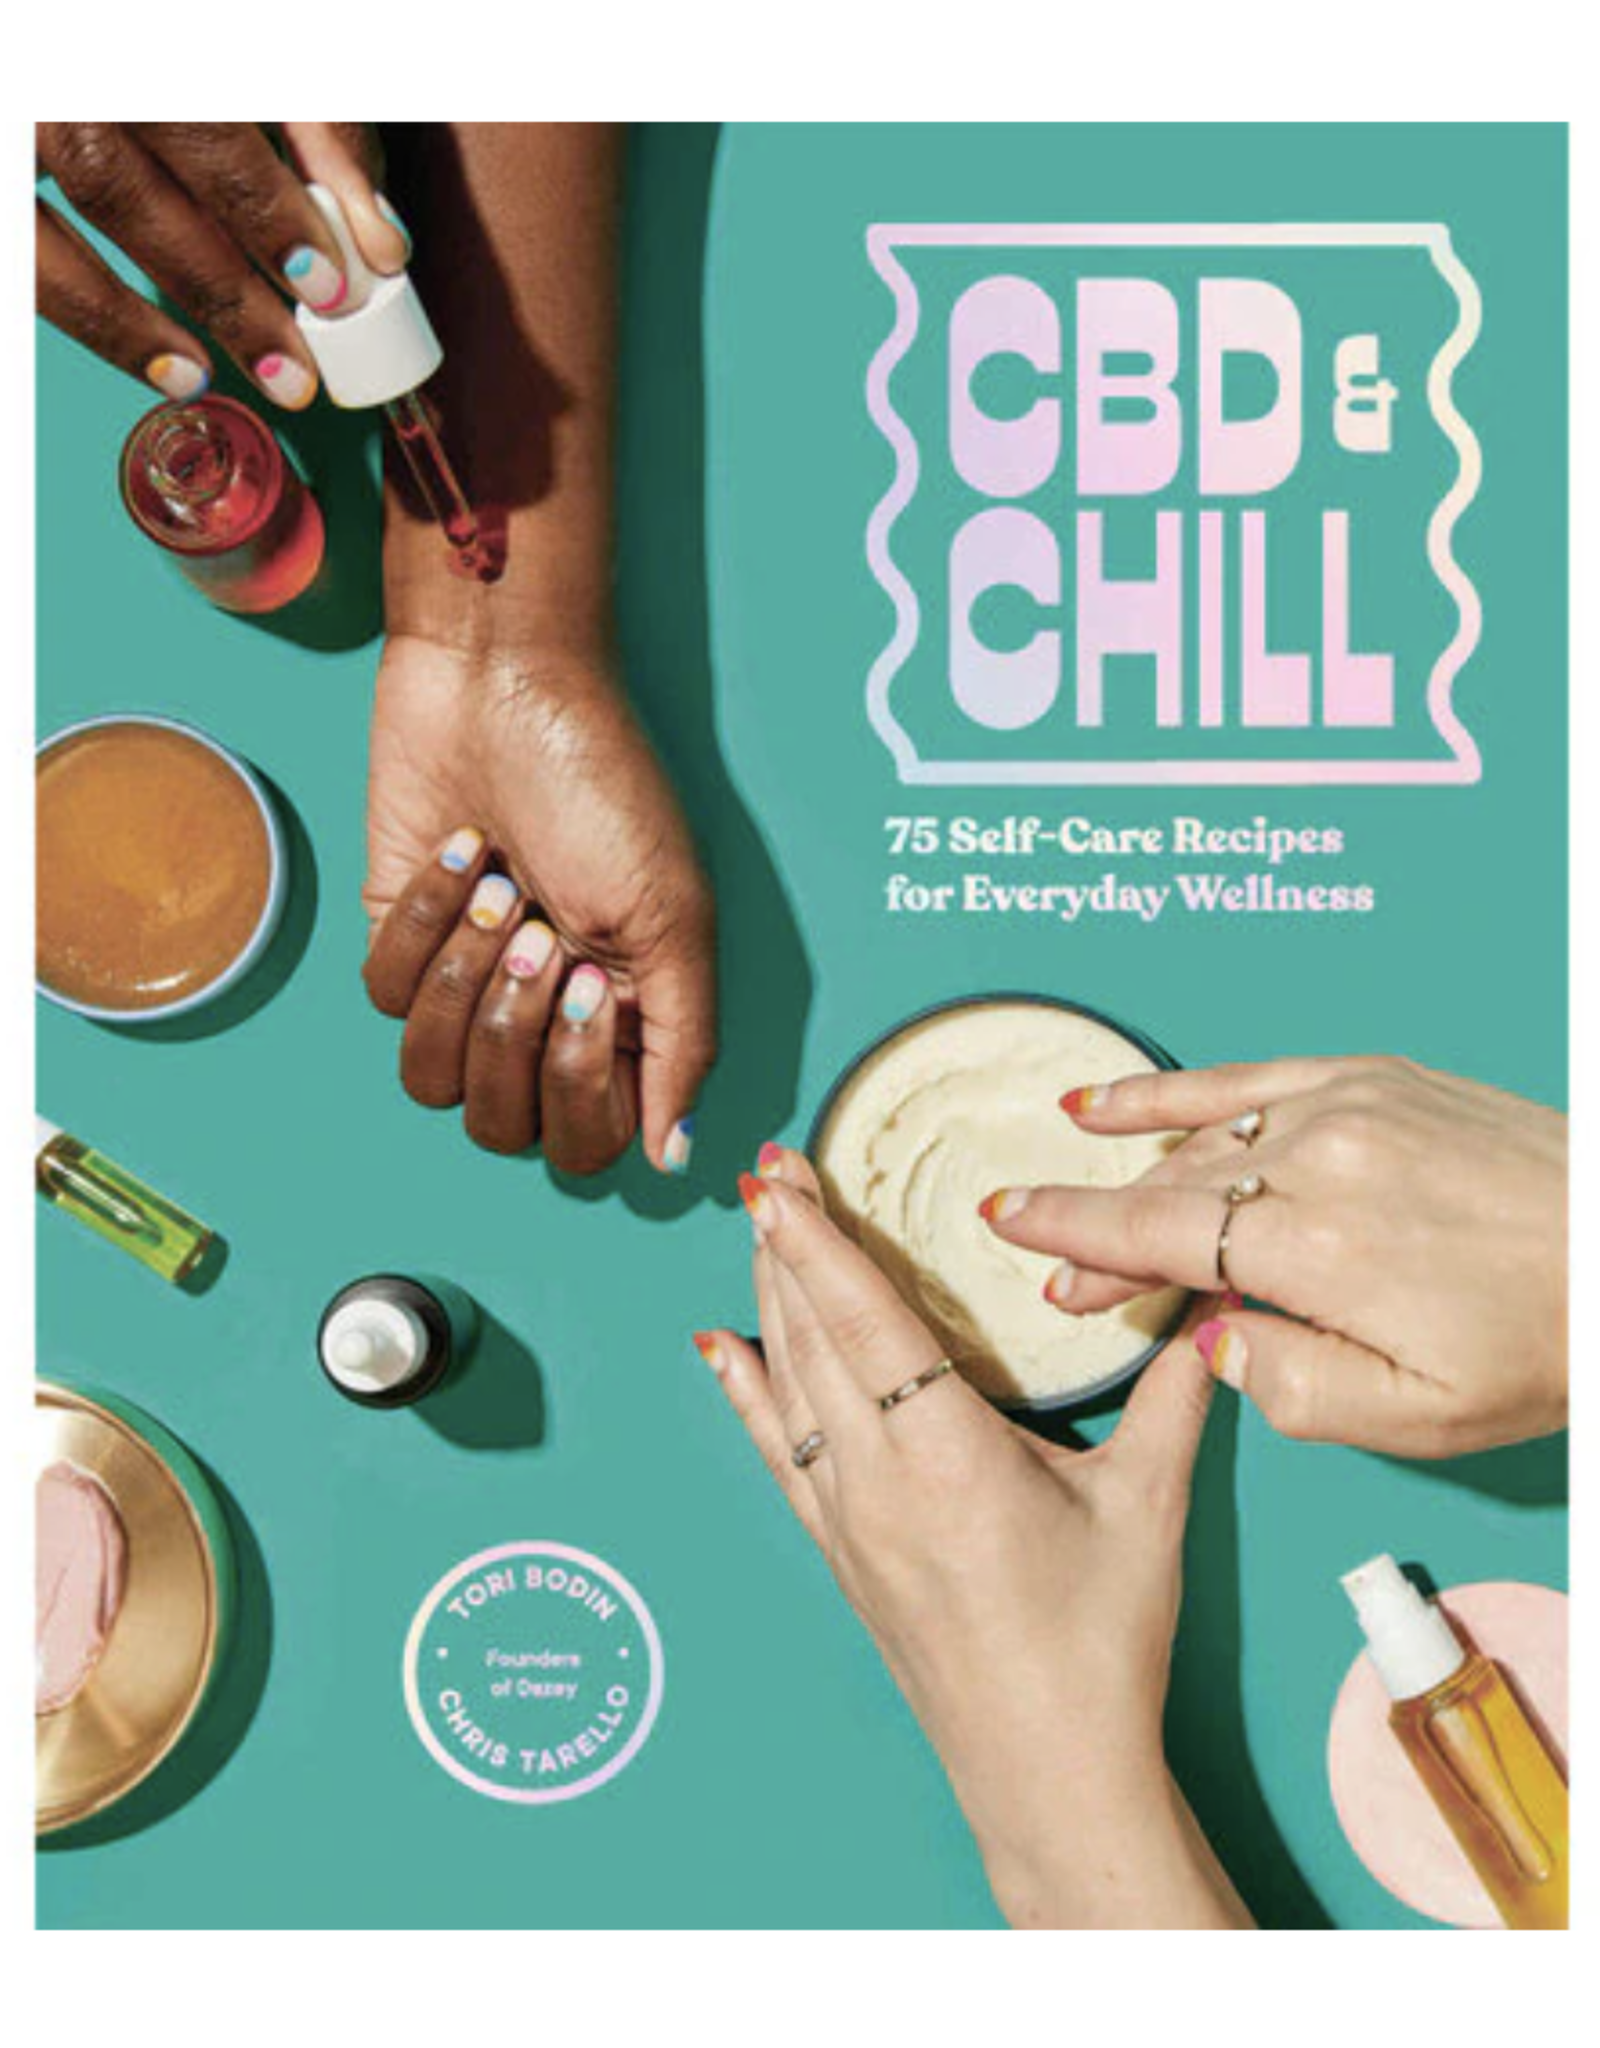 CBD & Chill: 75 Self-Care Recipes for Everyday Wellness by Chris Tarello and Tori Boden